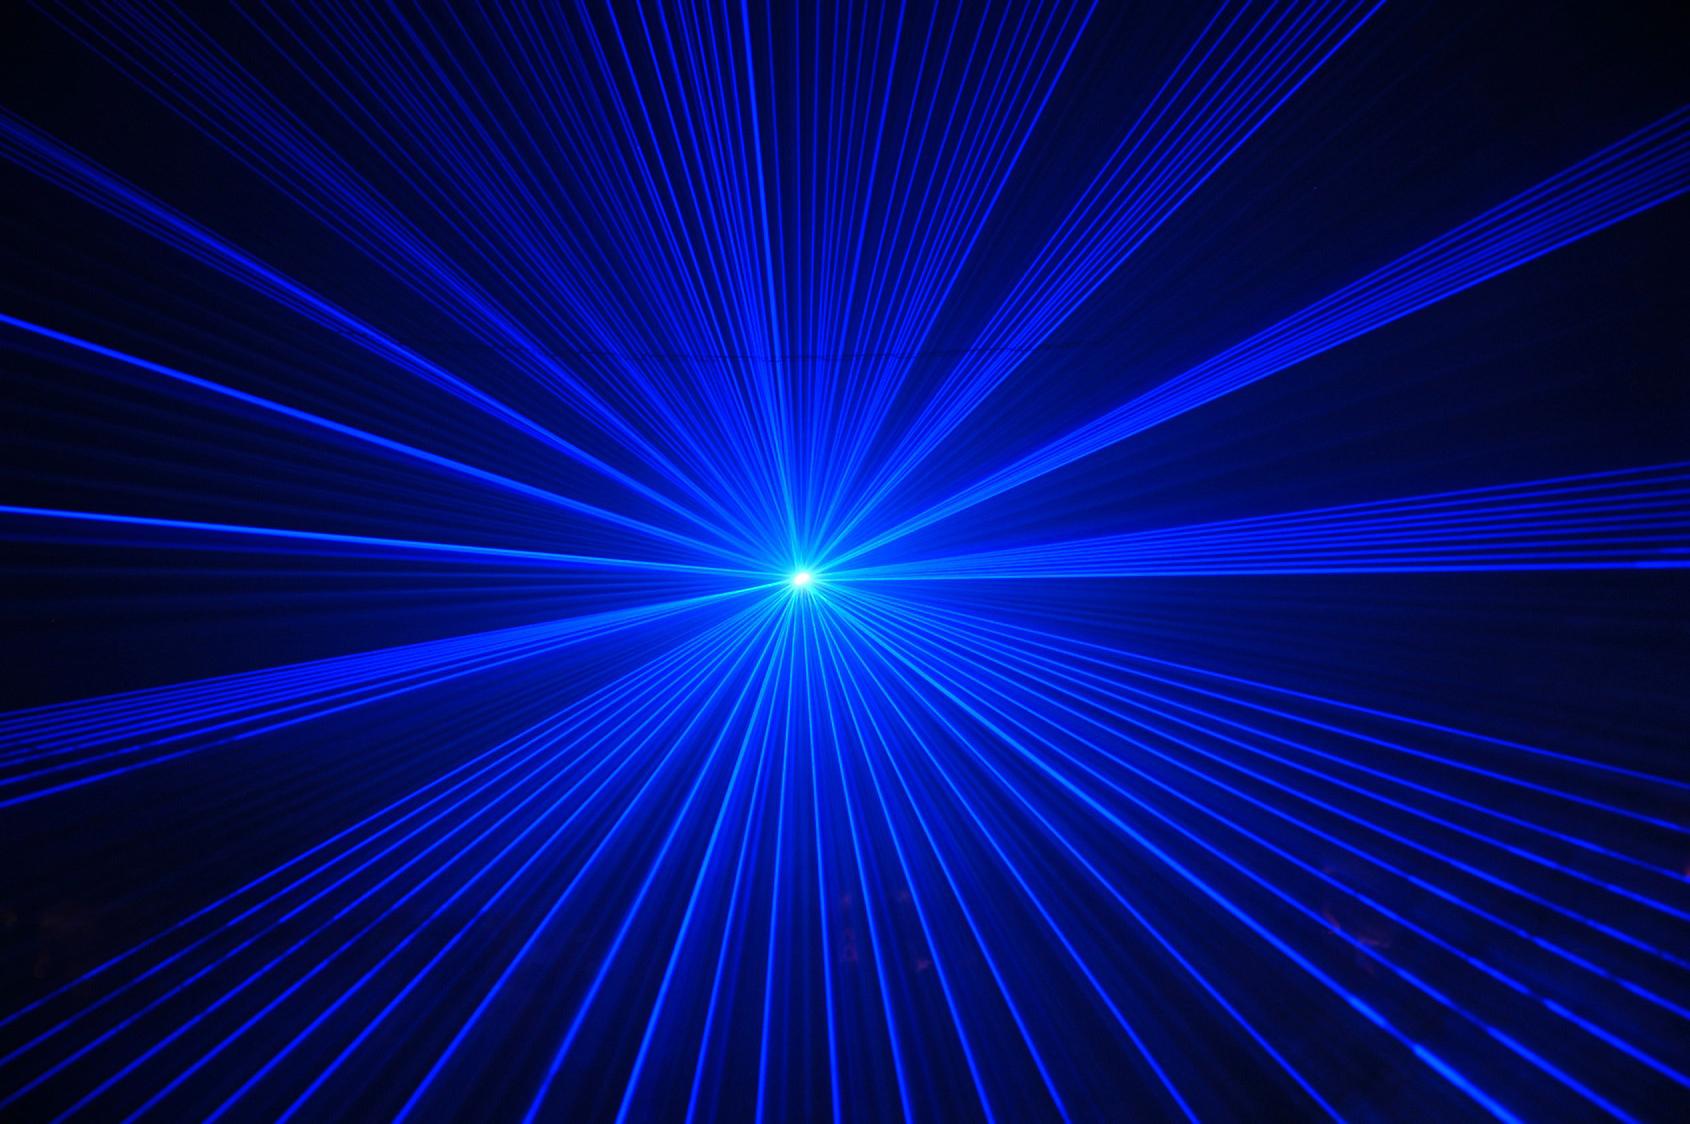 asus zenfone 2 laser wallpaper,blue,light,electric blue,laser,visual effect lighting